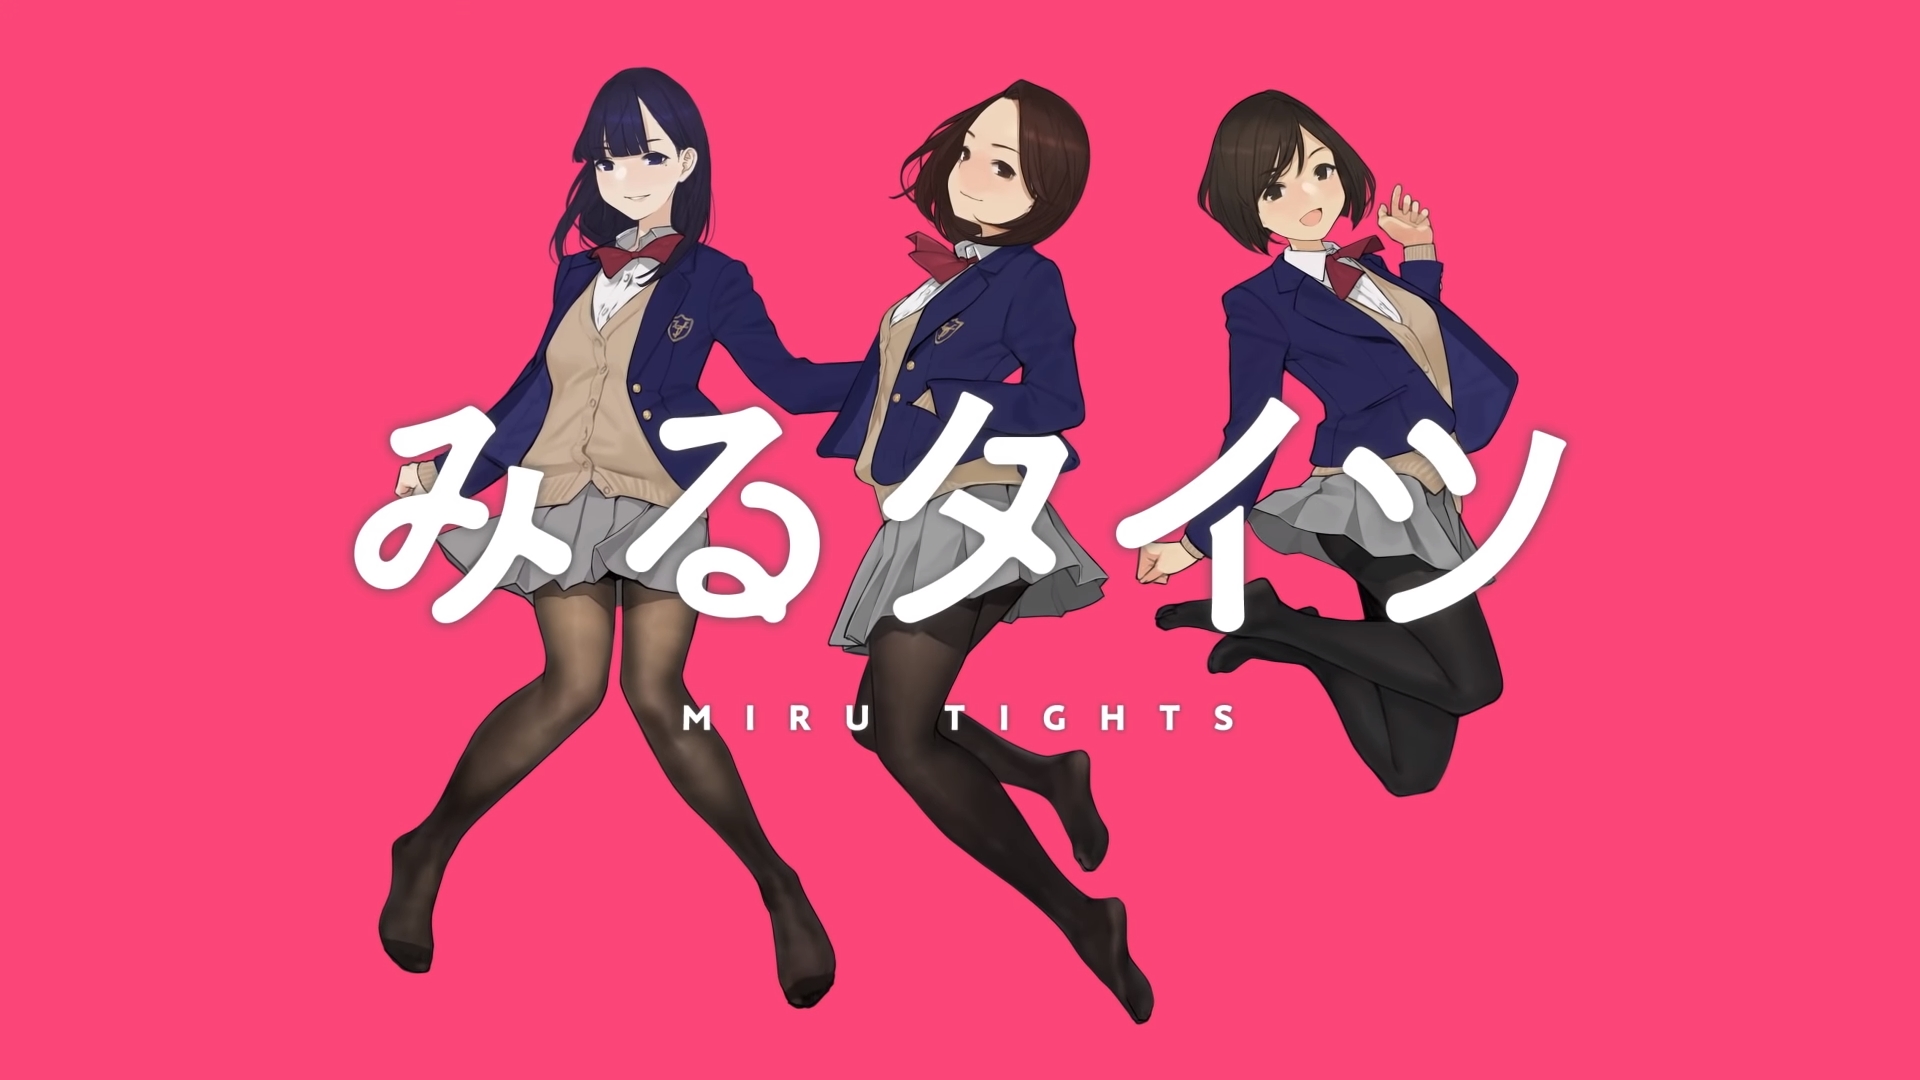 Miru Tights Homeroom Teacher Cast Revealed – an Anime Based on